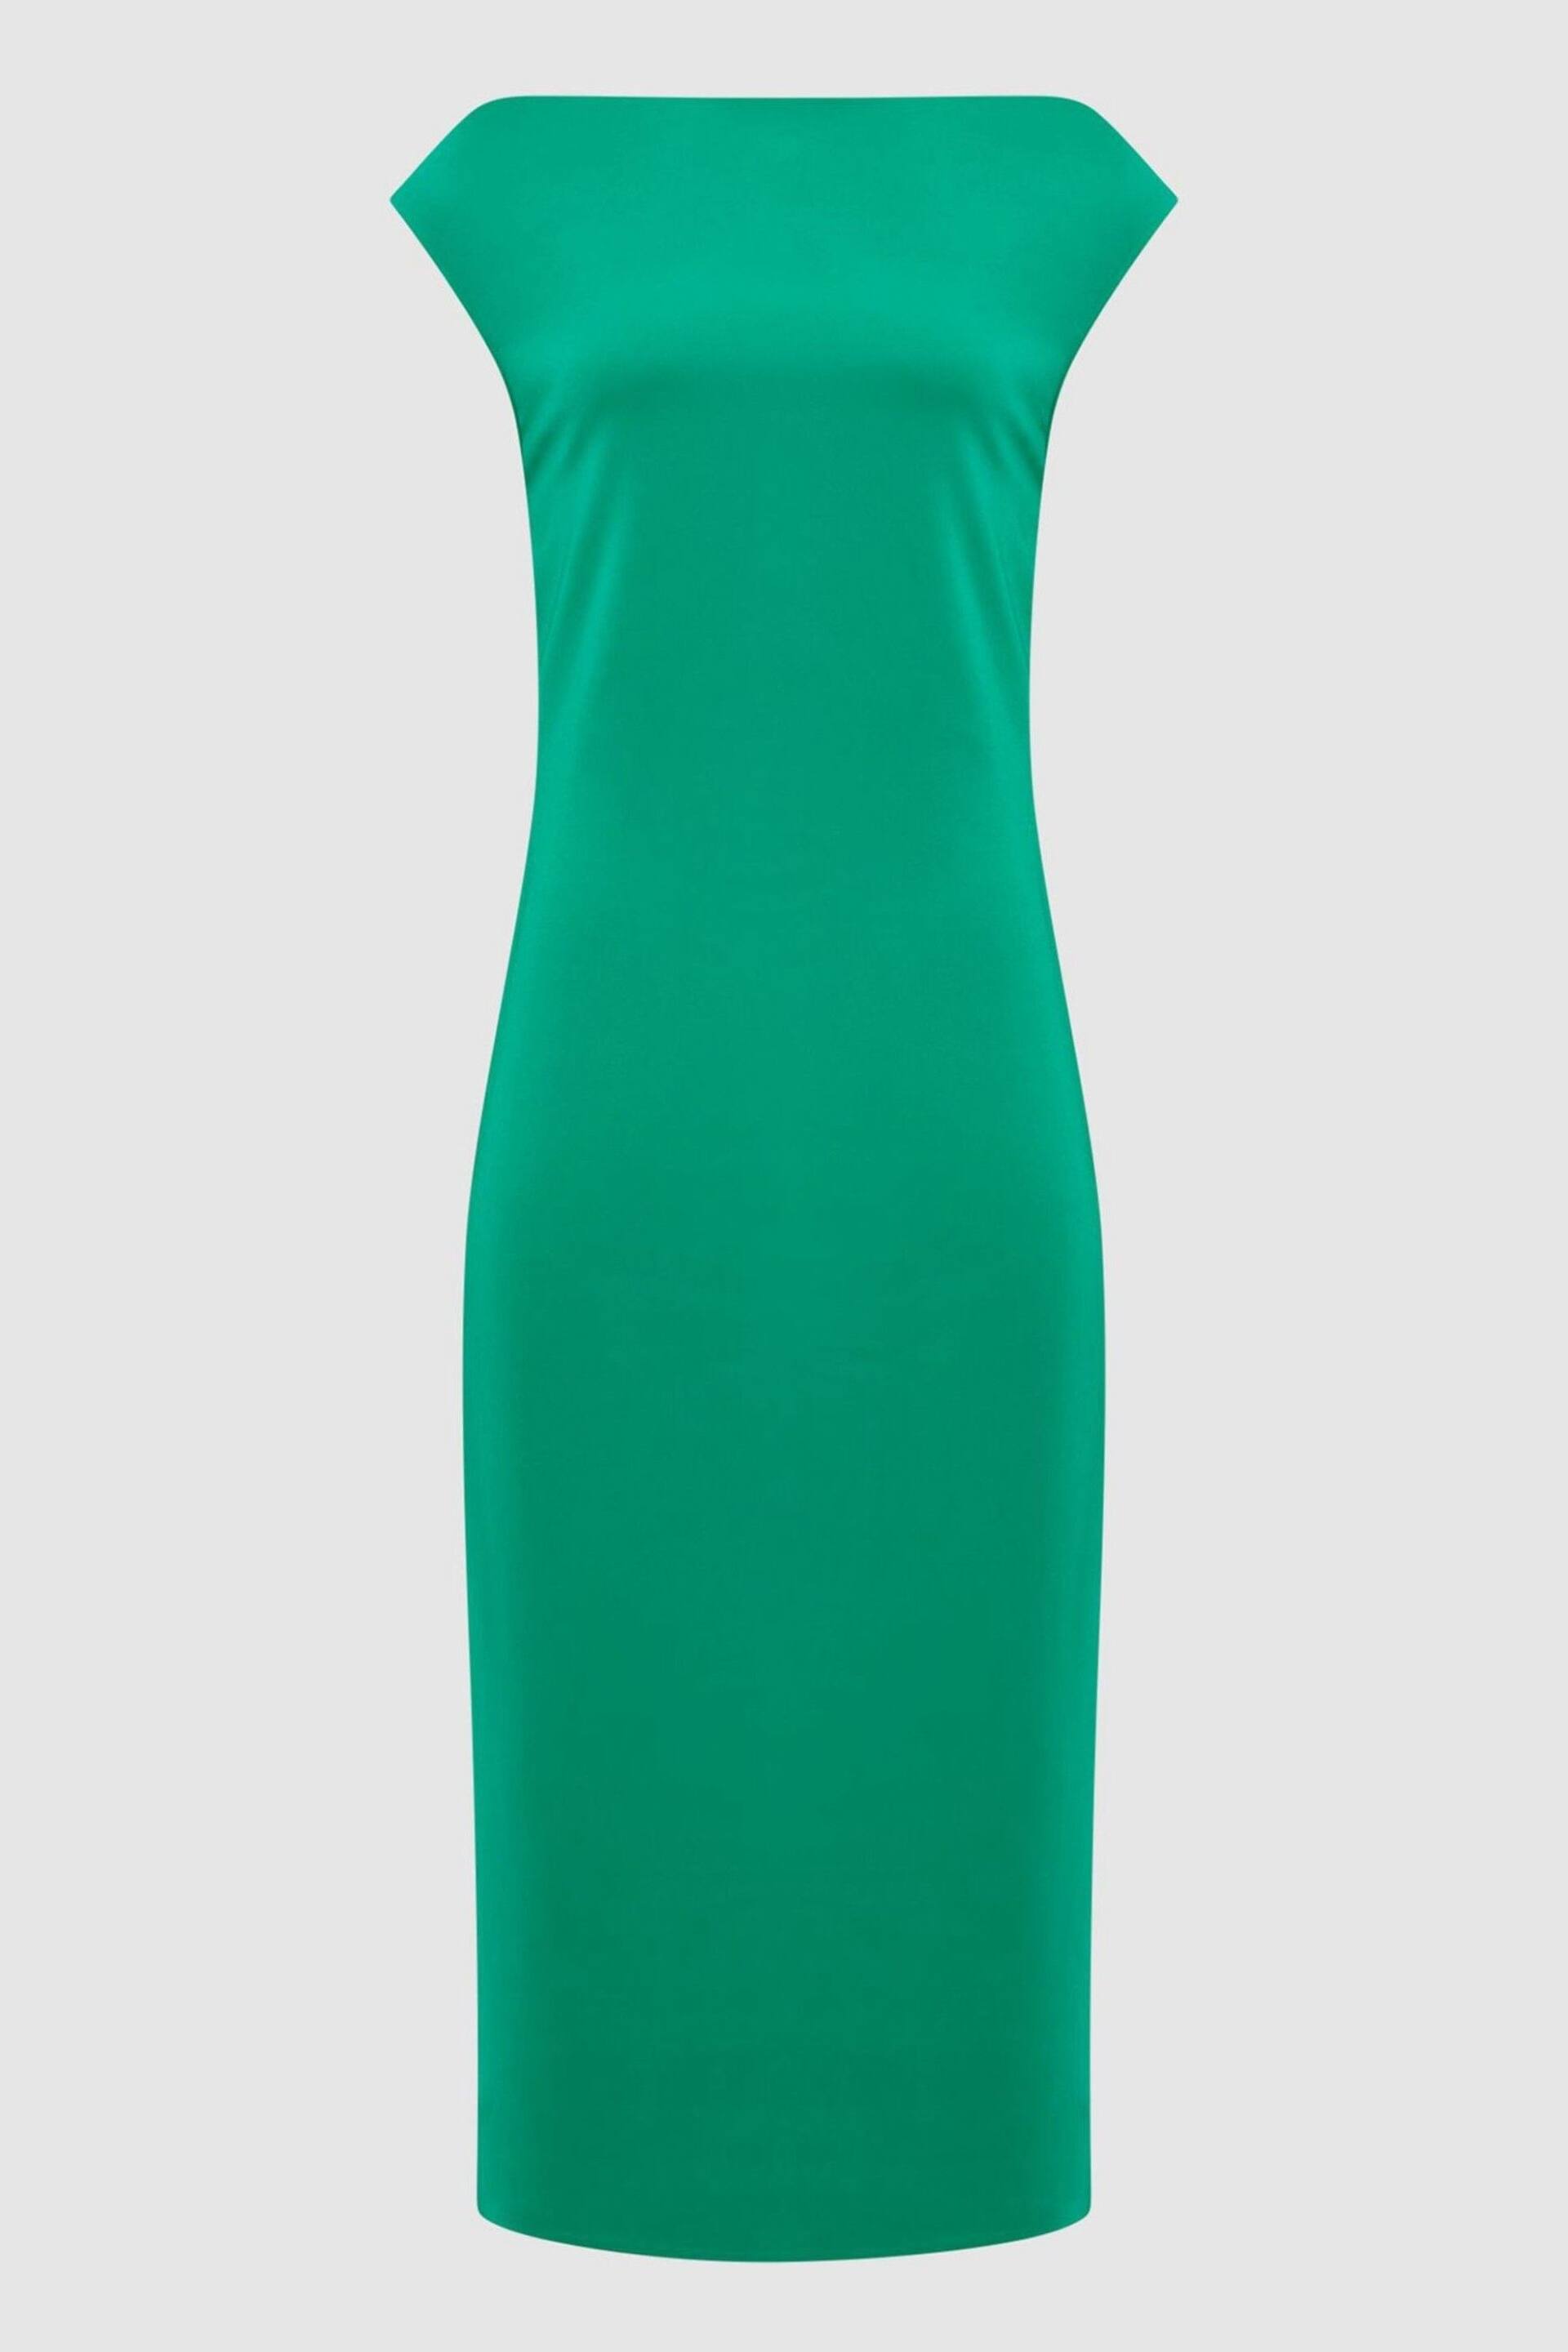 Reiss Green Zaria Off-Shoulder Bodycon Midi Dress - Image 2 of 6